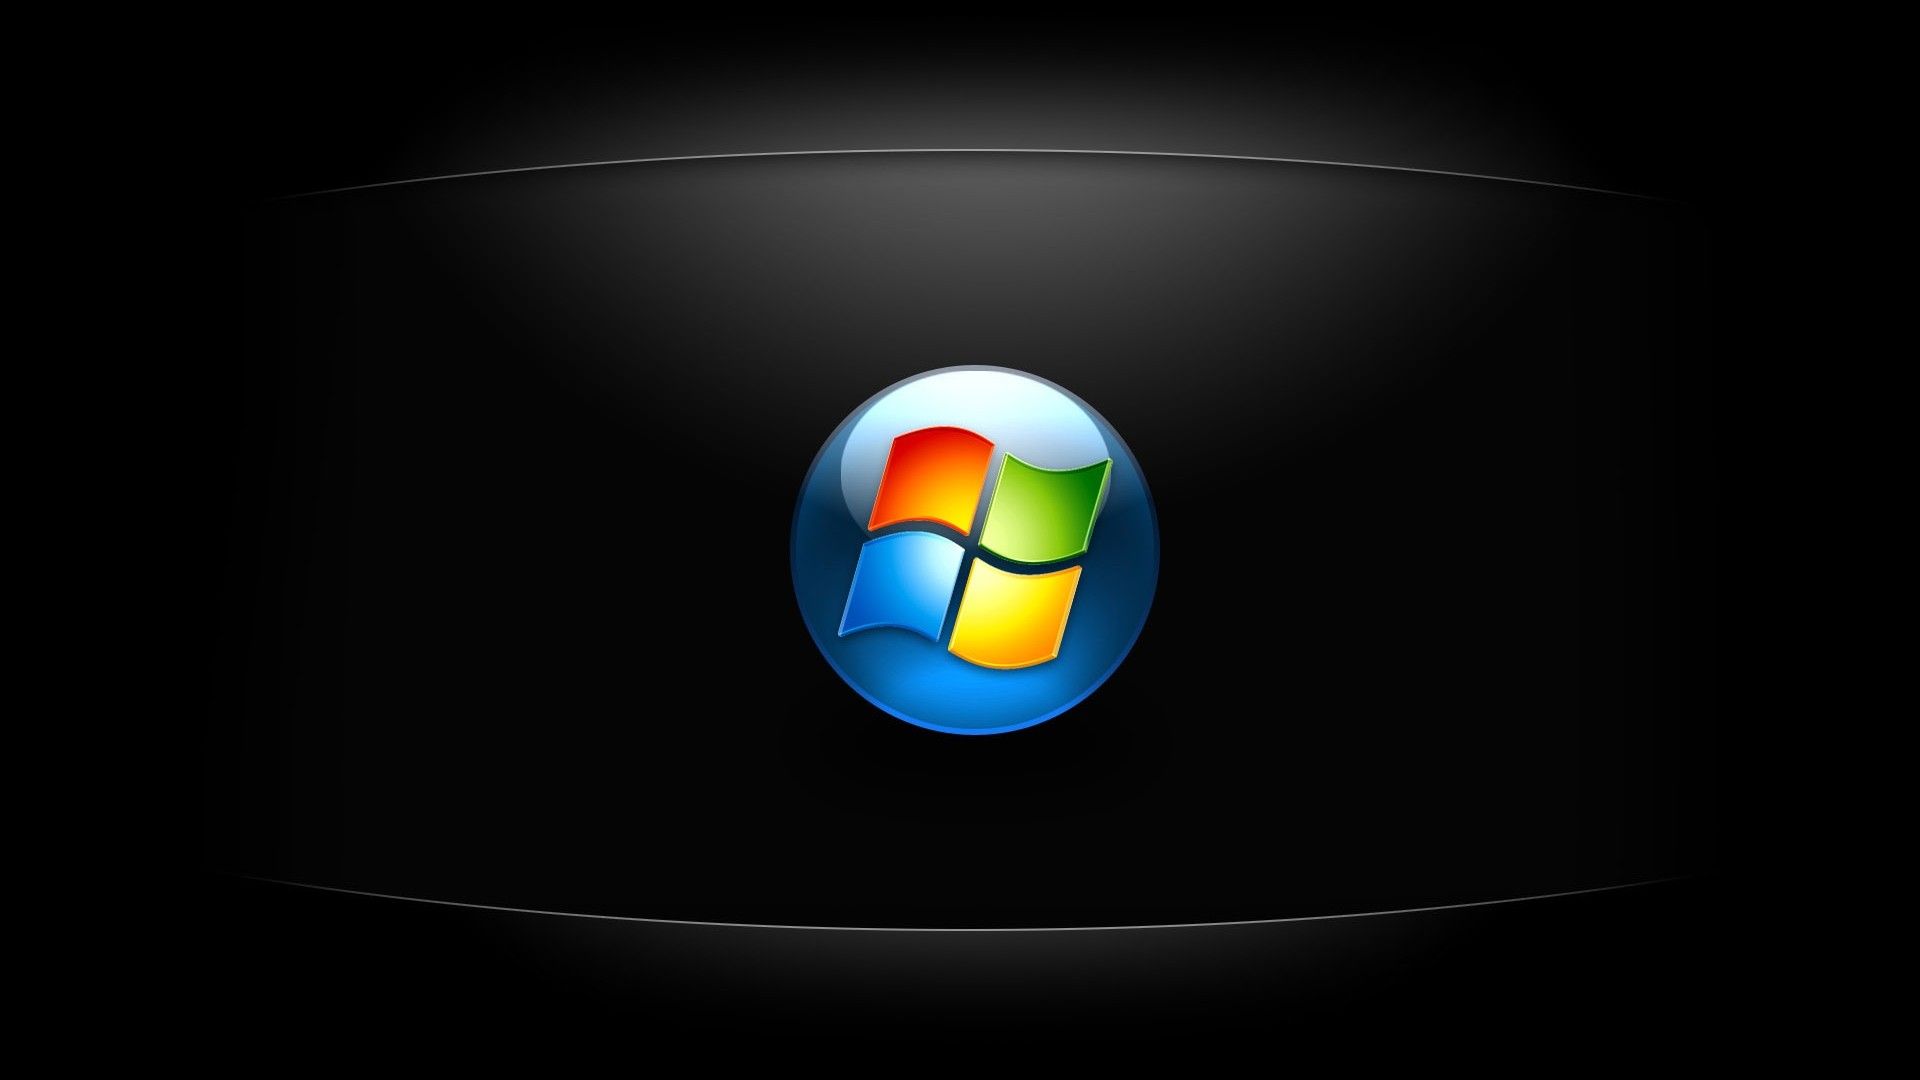 Dark Windows 7 HD Wallpaper - HD Backgrounds